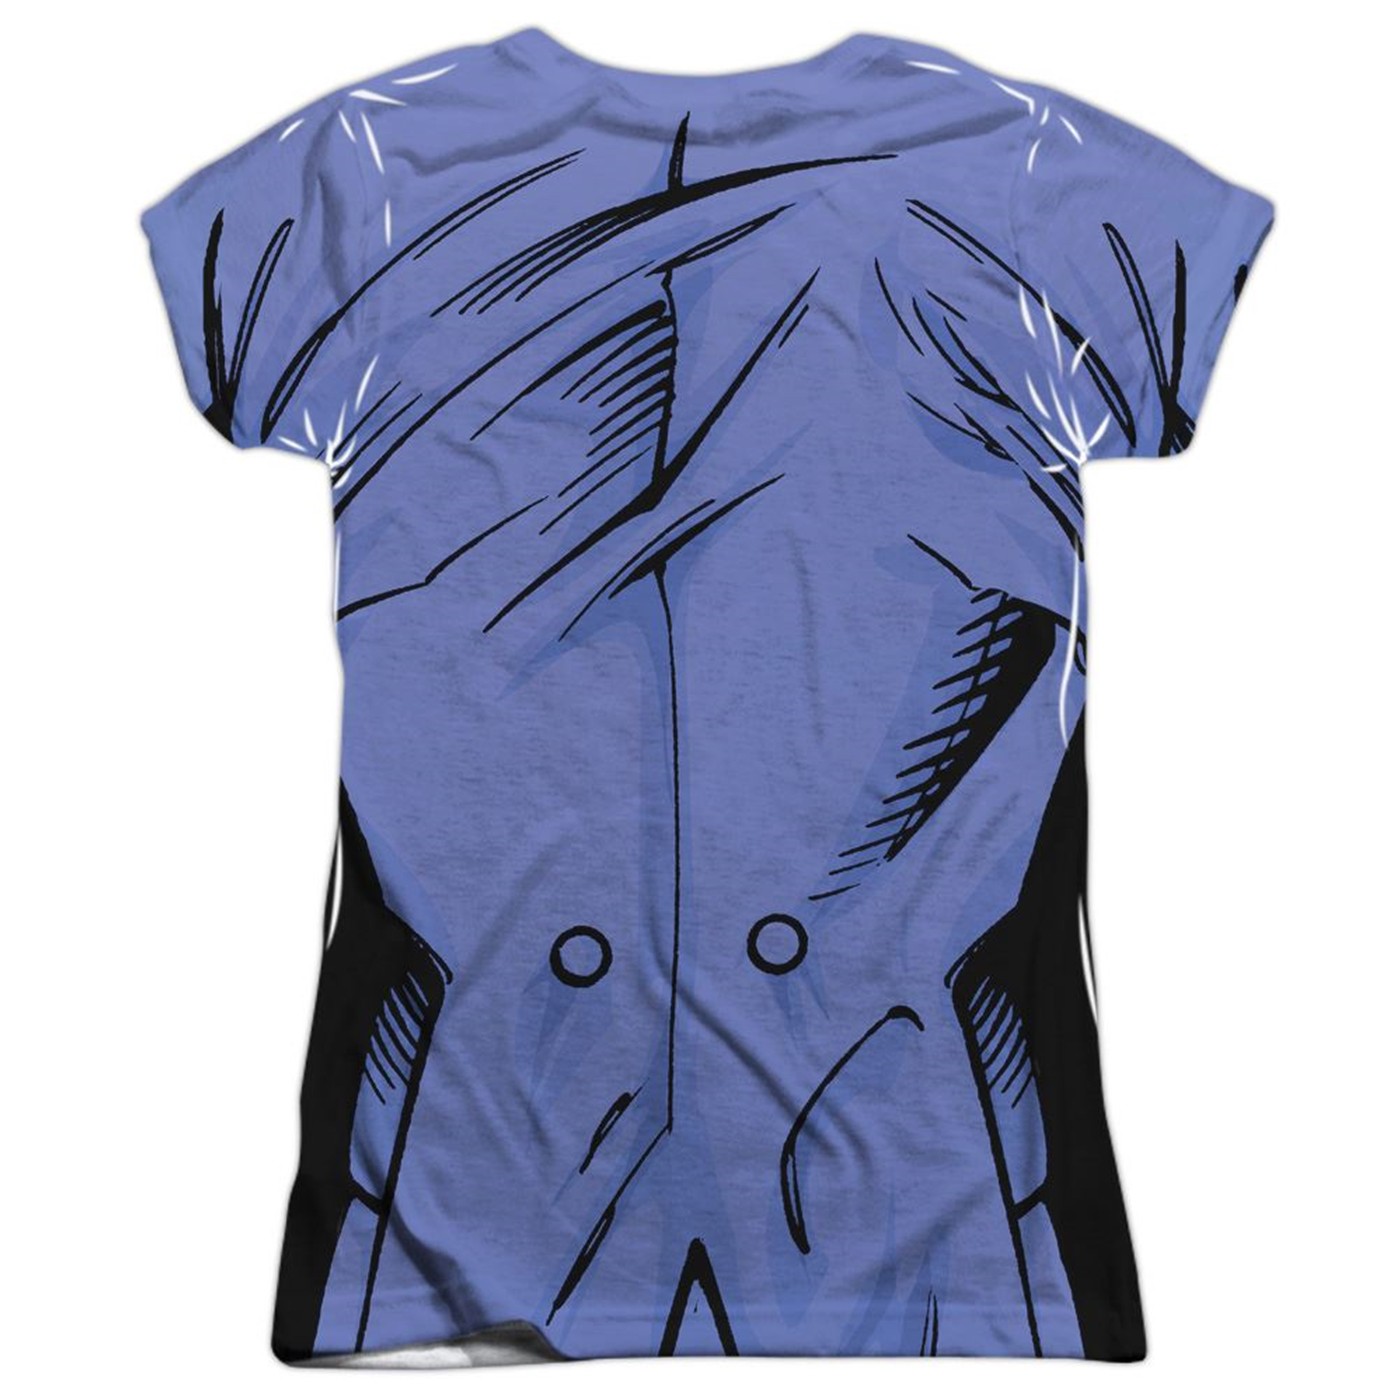 Joker Uniform Sublimated Costume Women's T-Shirt